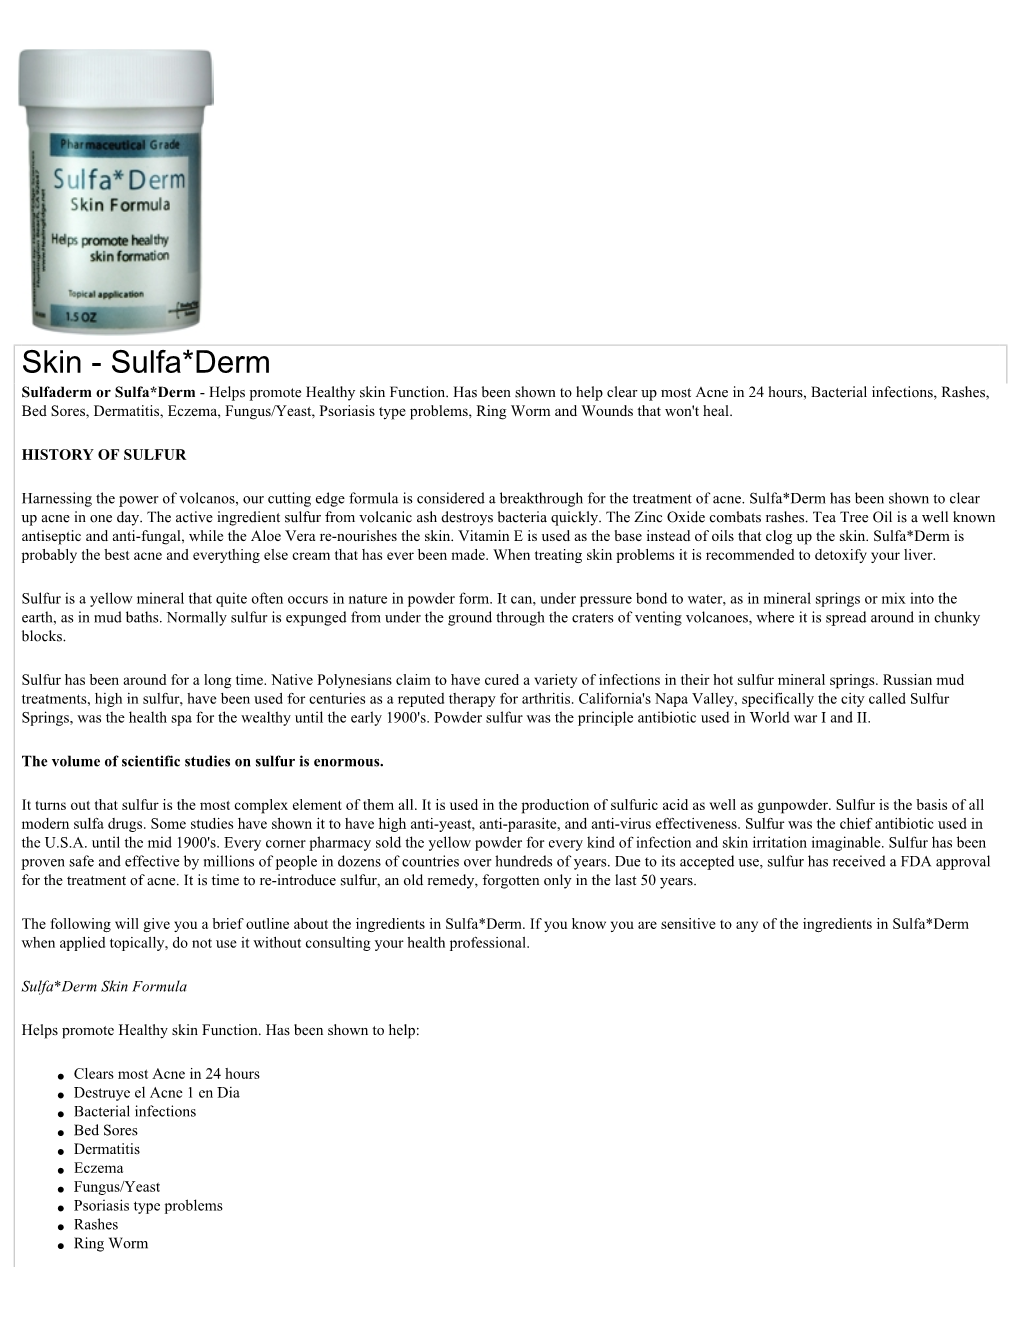 Skin - Sulfa*Derm Sulfaderm Or Sulfa*Derm - Helps Promote Healthy Skin Function